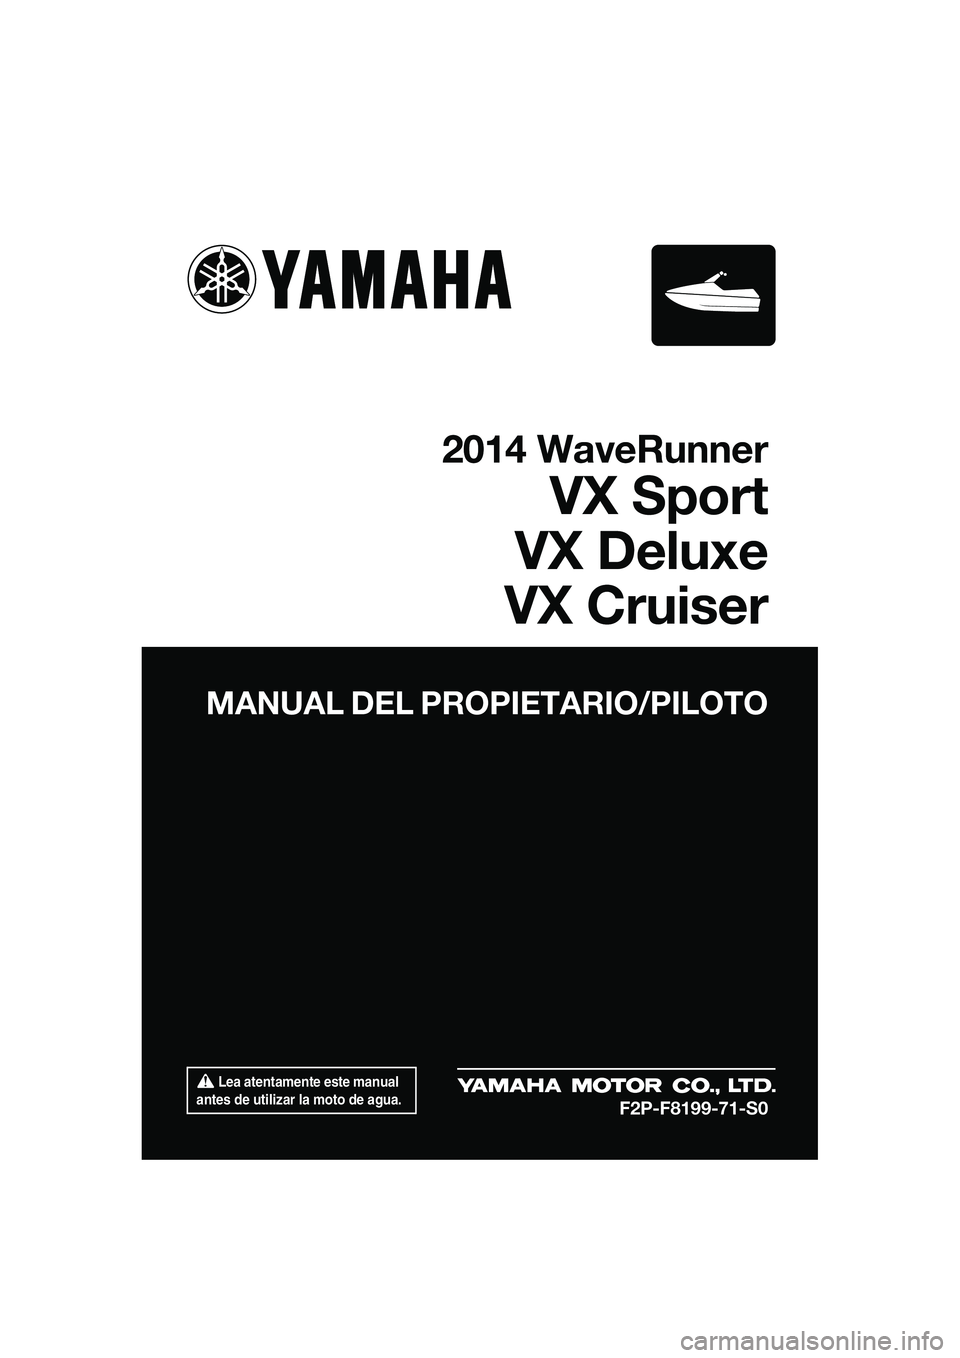 YAMAHA VX SPORT 2014  Manuale de Empleo (in Spanish)  Lea atentamente este manual 
antes de utilizar la moto de agua.
MANUAL DEL PROPIETARIO/PILOTO
2014 WaveRunner
VX Sport
VX Deluxe
VX Cruiser
F2P-F8199-71-S0
UF2P71S0.book  Page 1  Wednesday, July 10, 